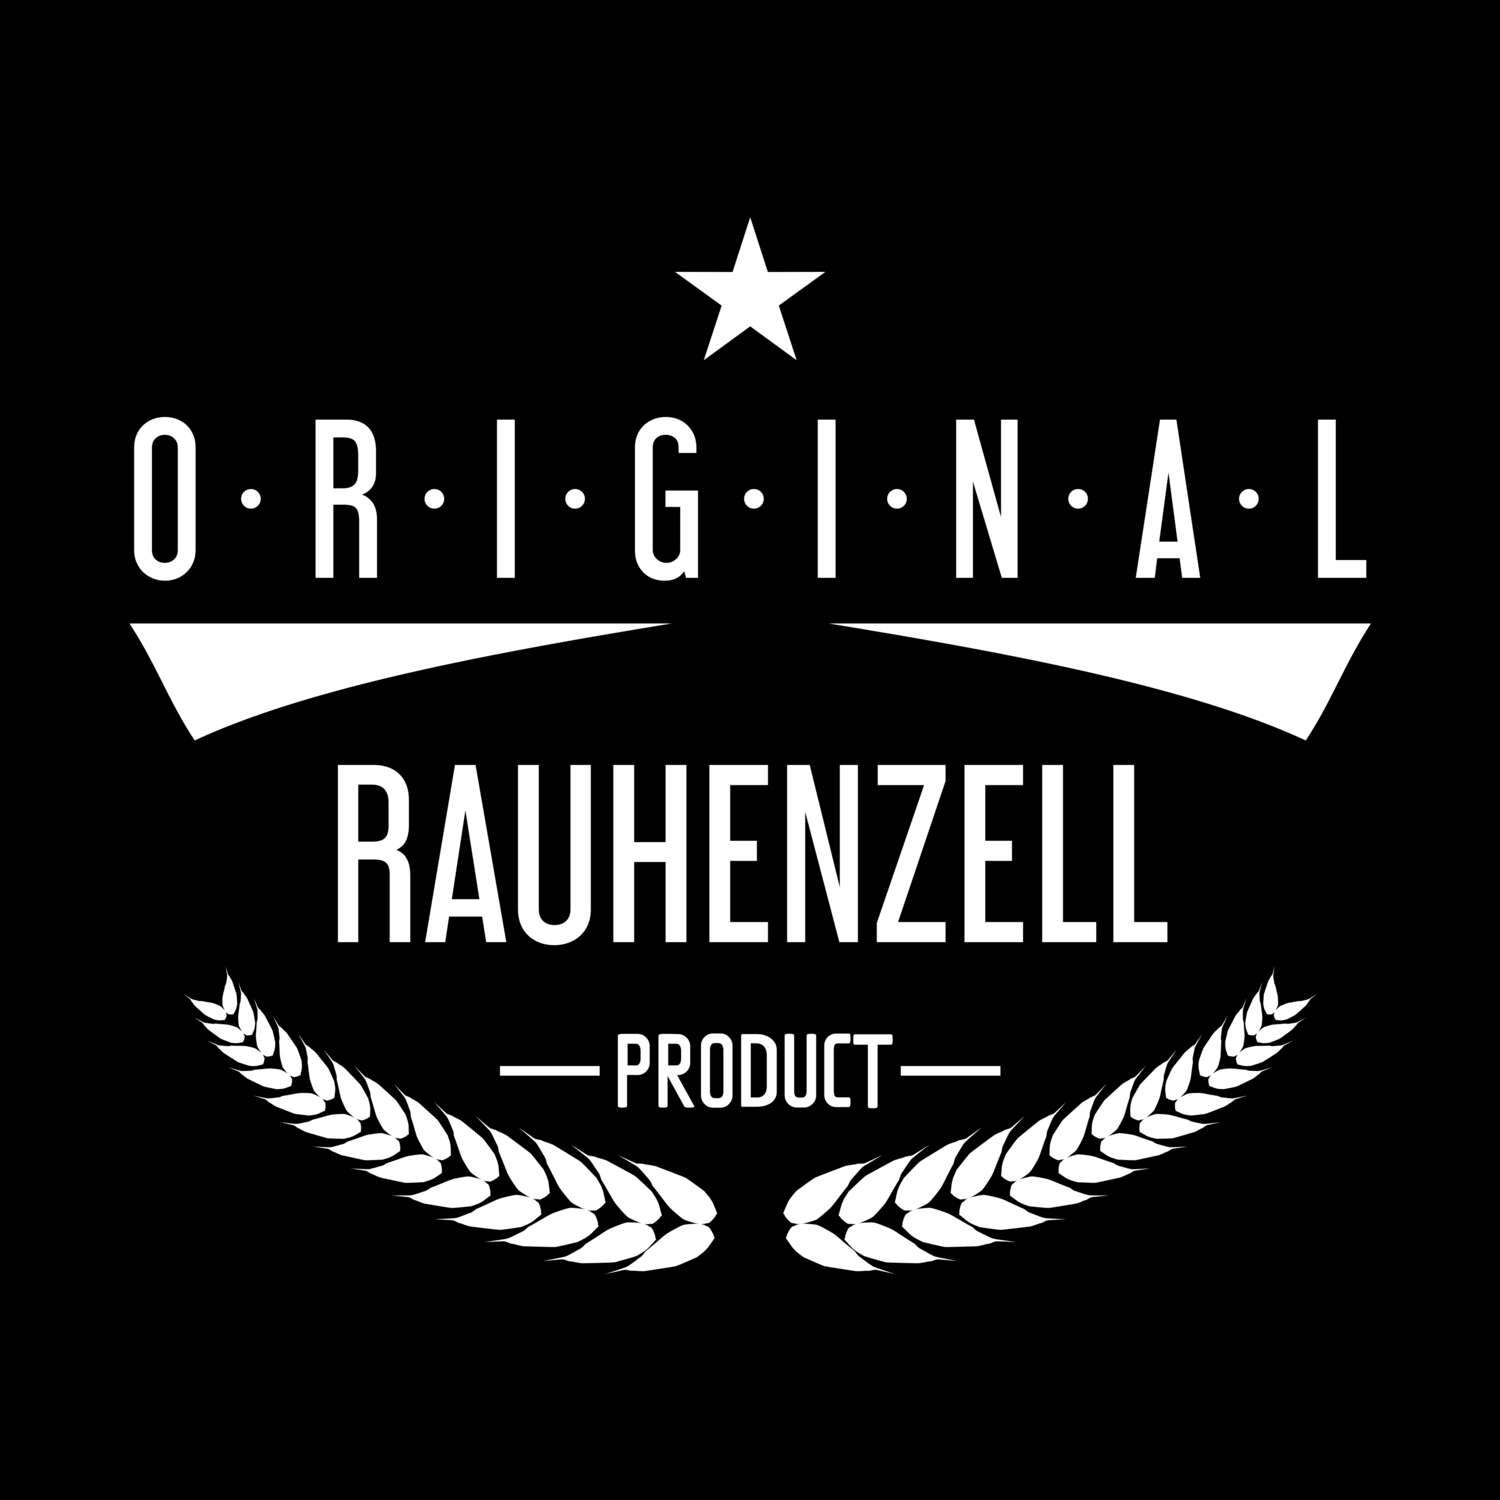 Rauhenzell T-Shirt »Original Product«